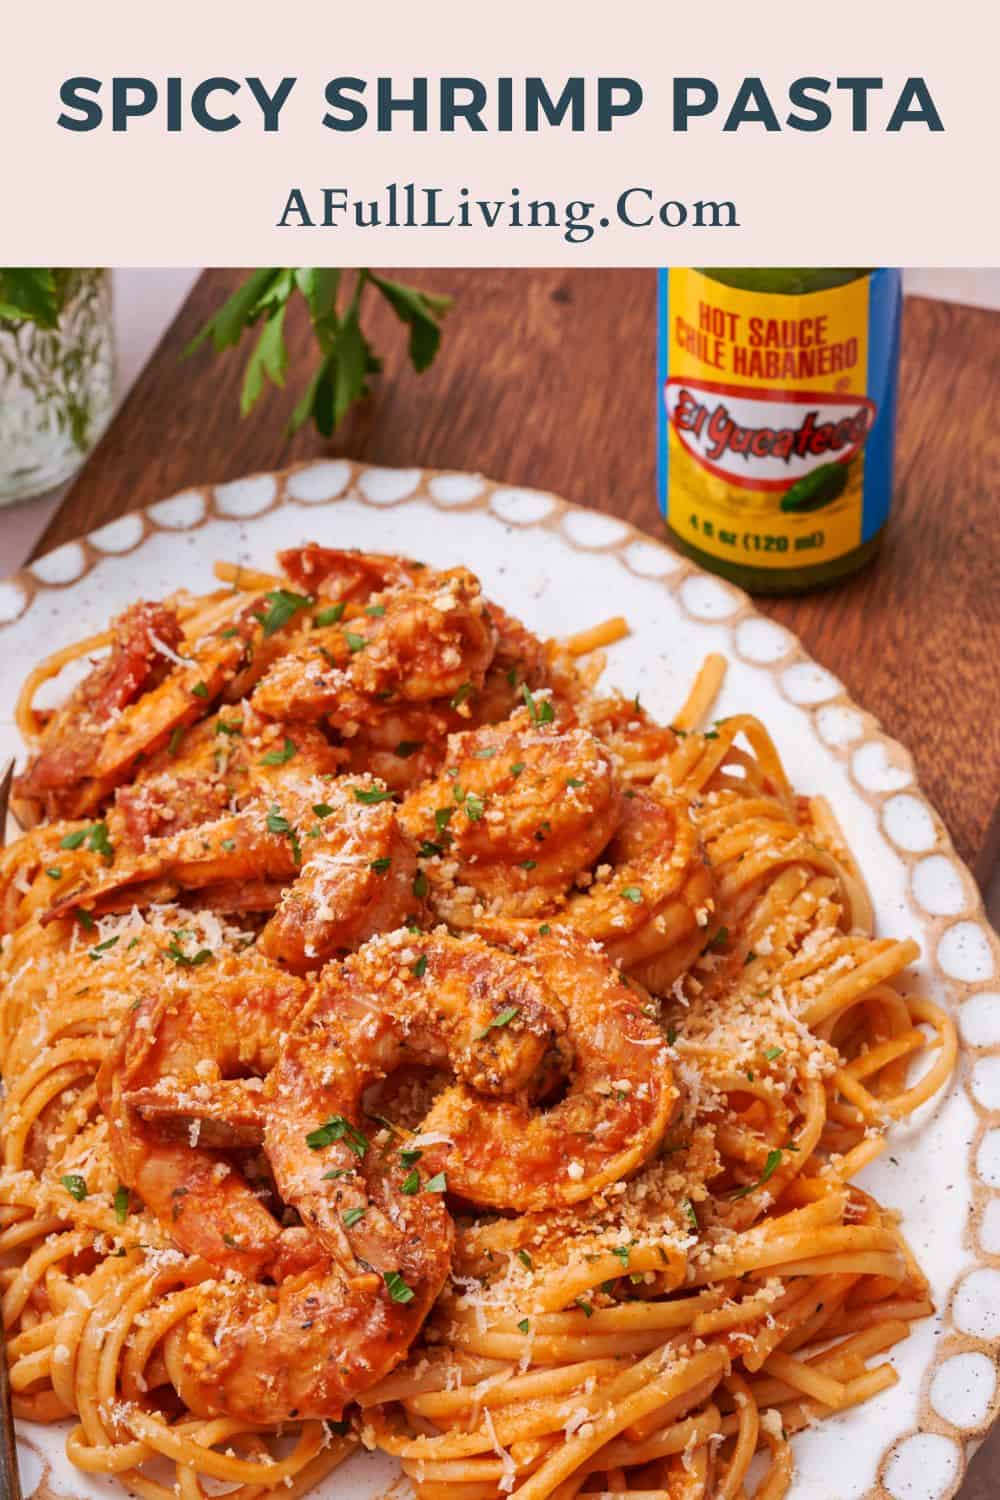 Spicy shrimp pasta with habanero sauce